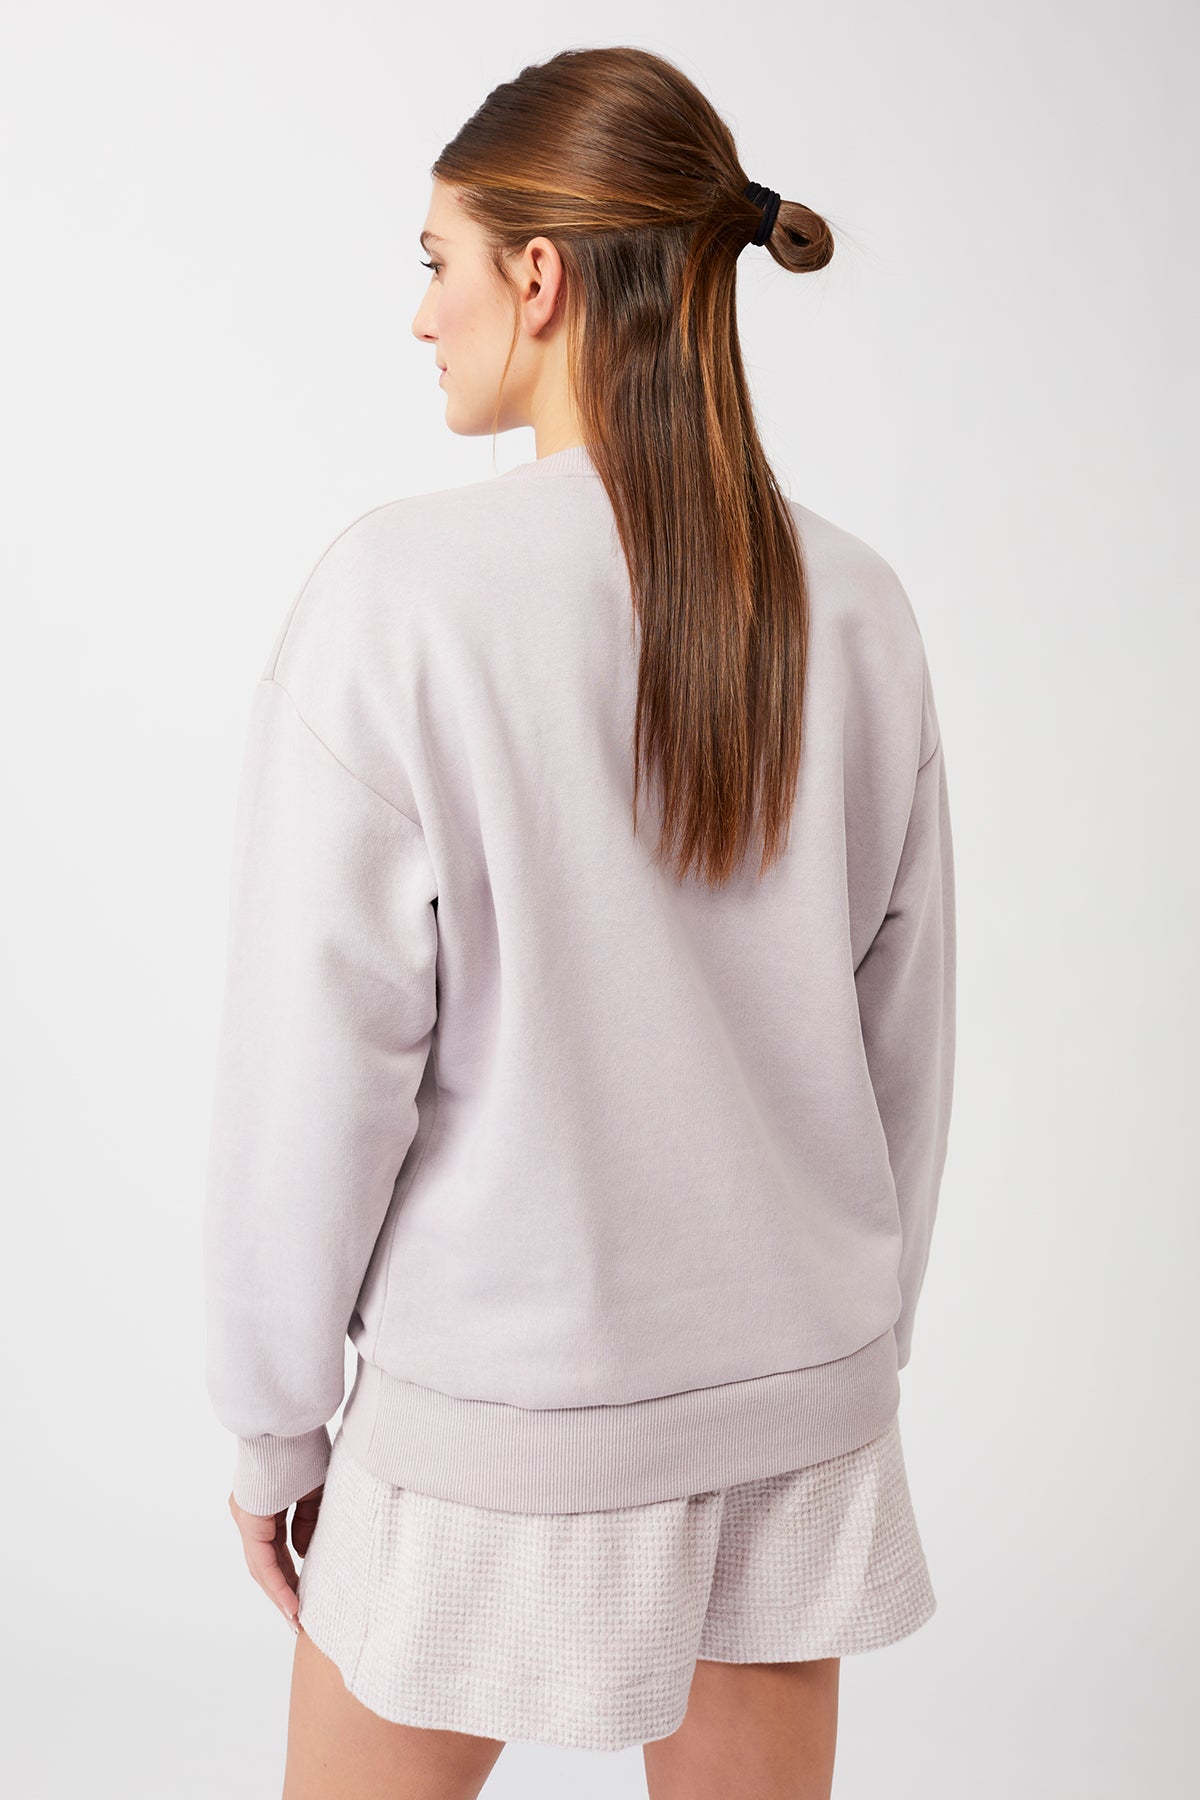 Mandala Yoga Pullover Rose Rückseite - Peace Sweater